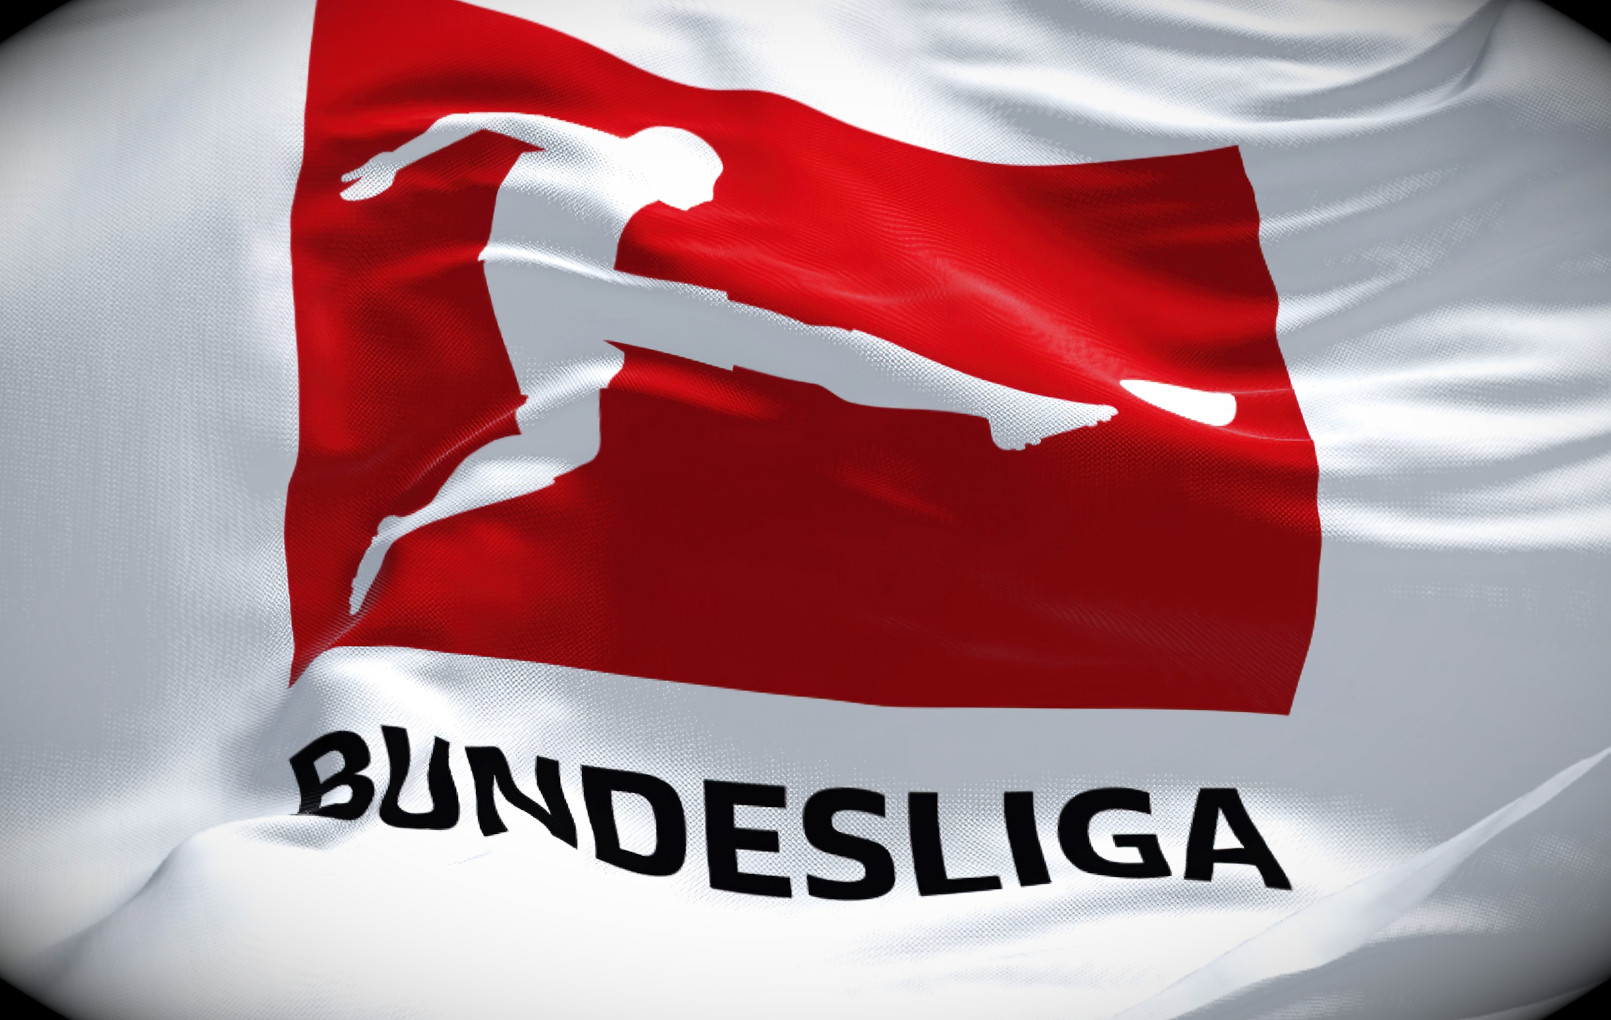 Fußball-Bundesliga